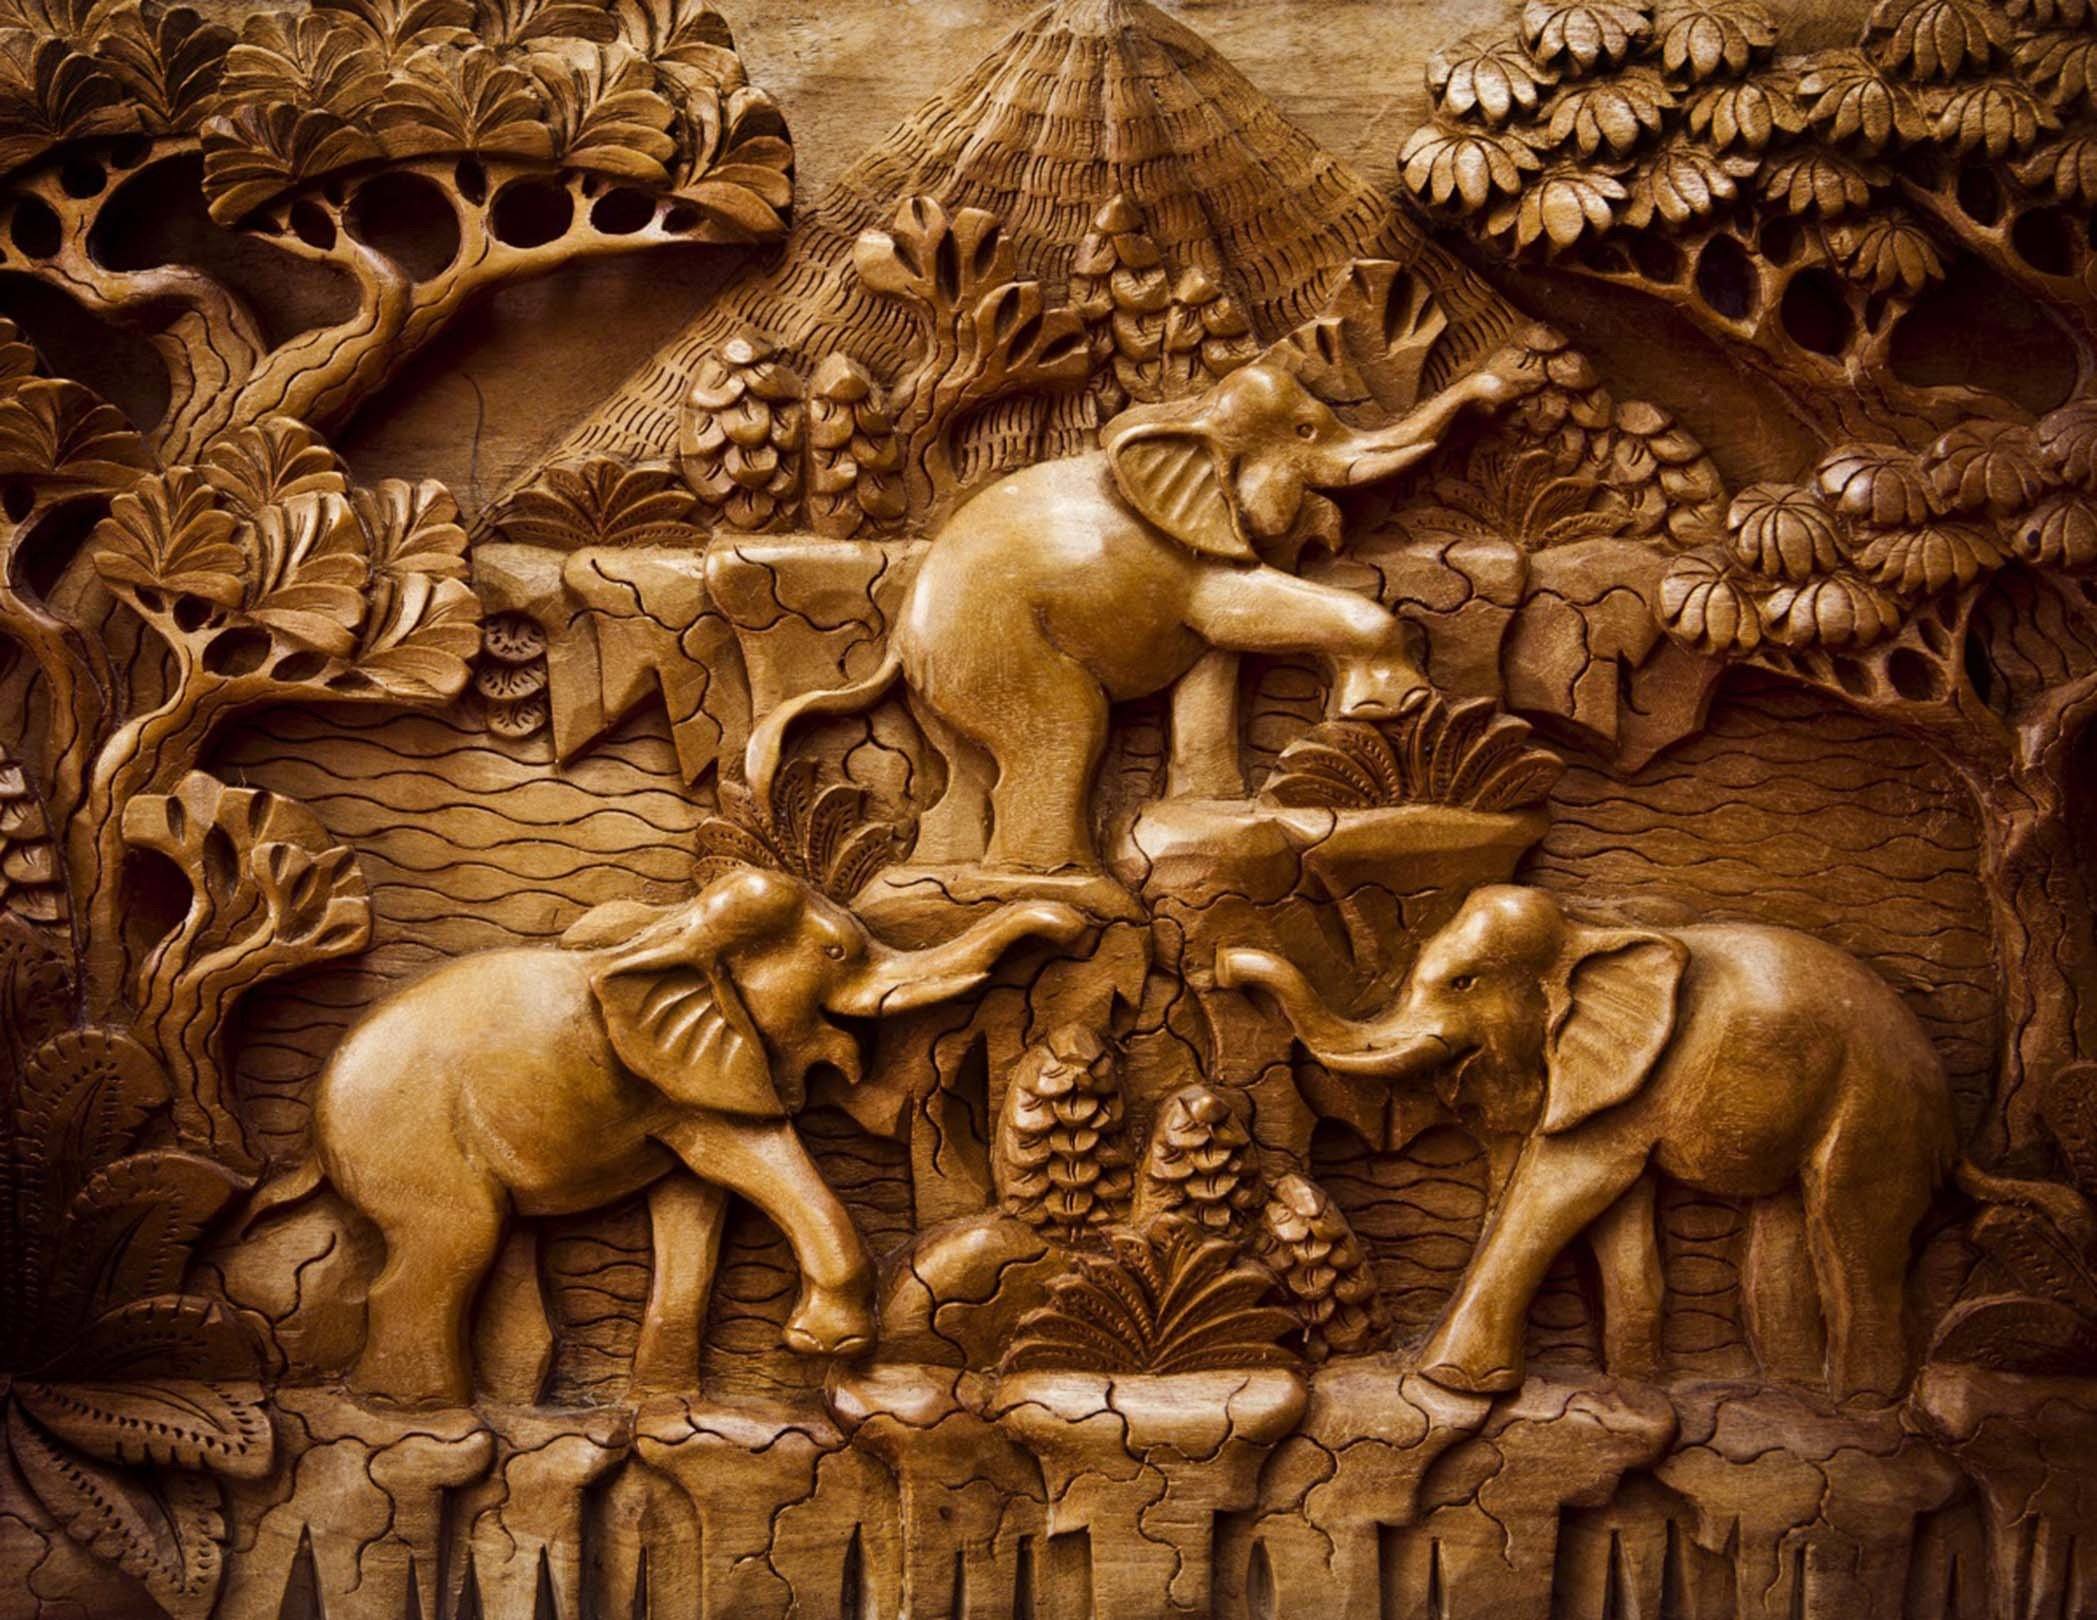 3D Elephants Wood Carvings 427 Garage Door Mural Wallpaper AJ Wallpaper 